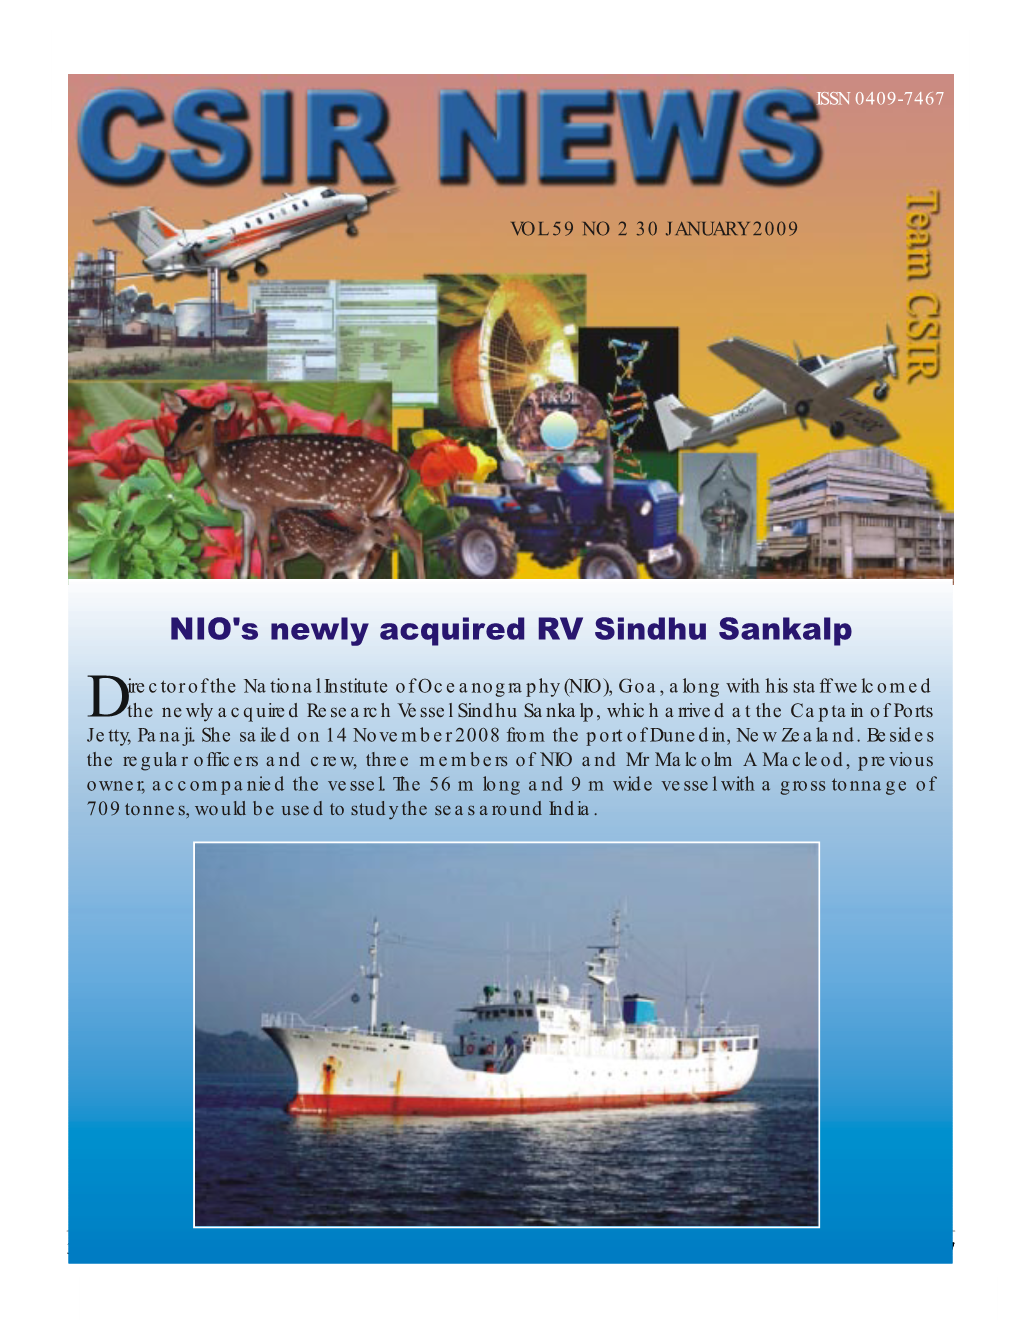 NIO's Newly Acquired RV Sindhu Sankalp